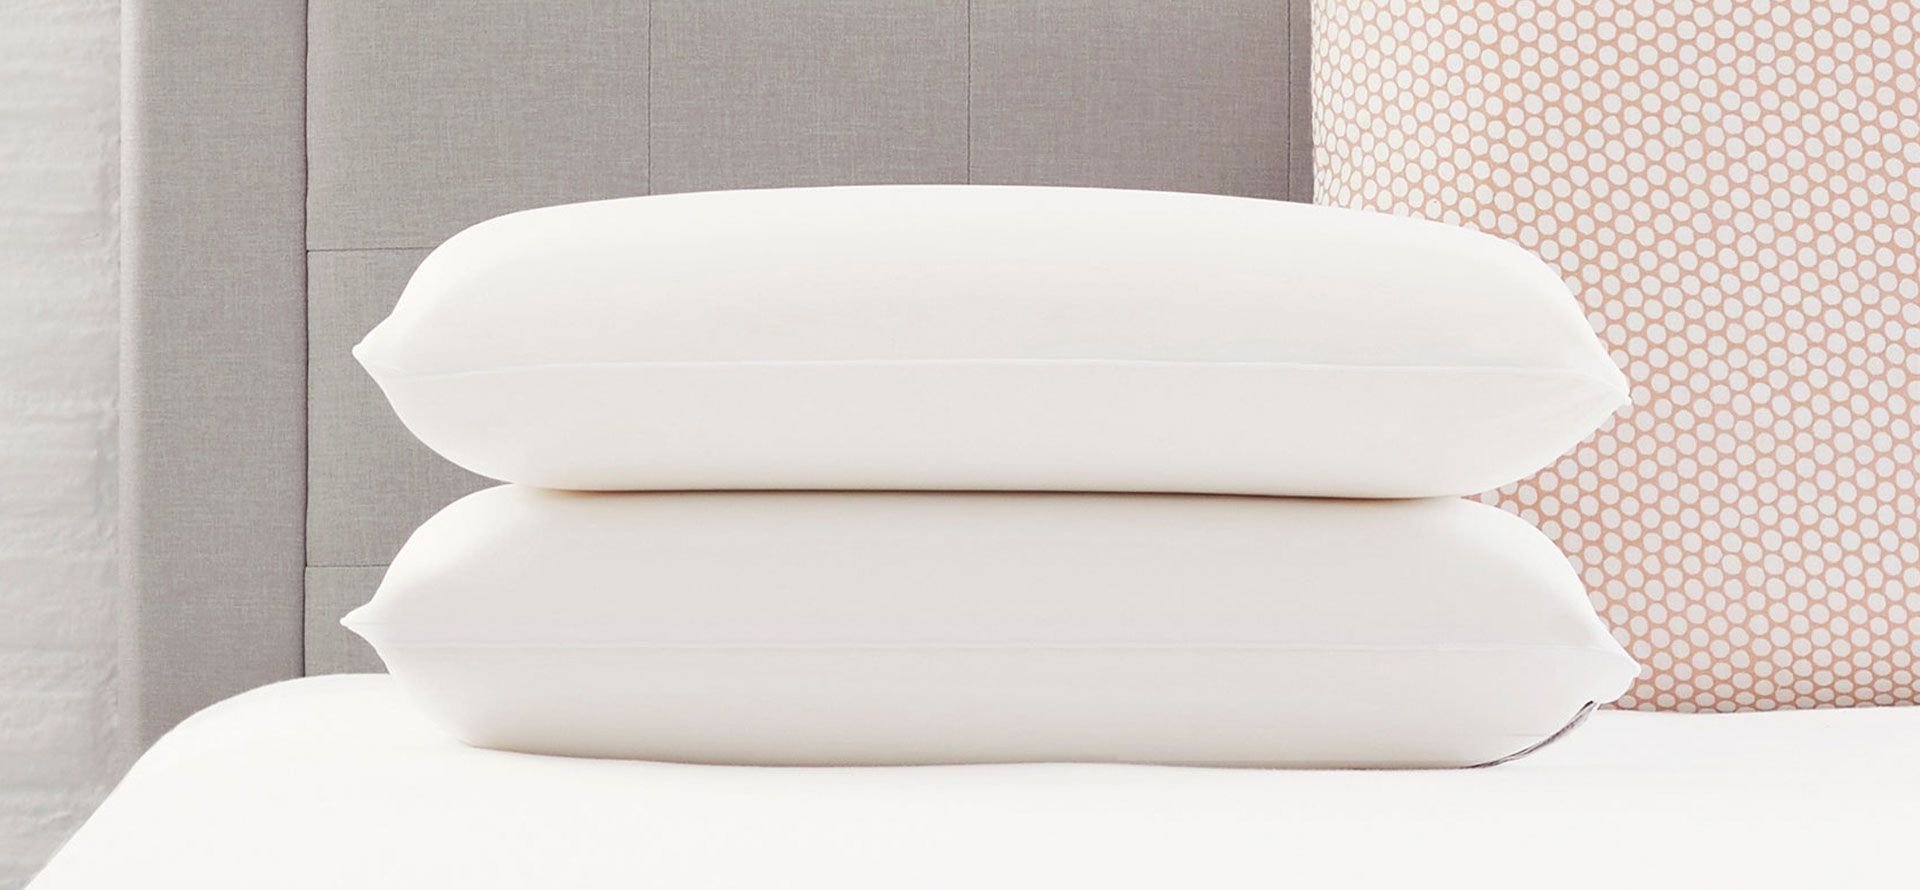 Pillows on the bed mattress.